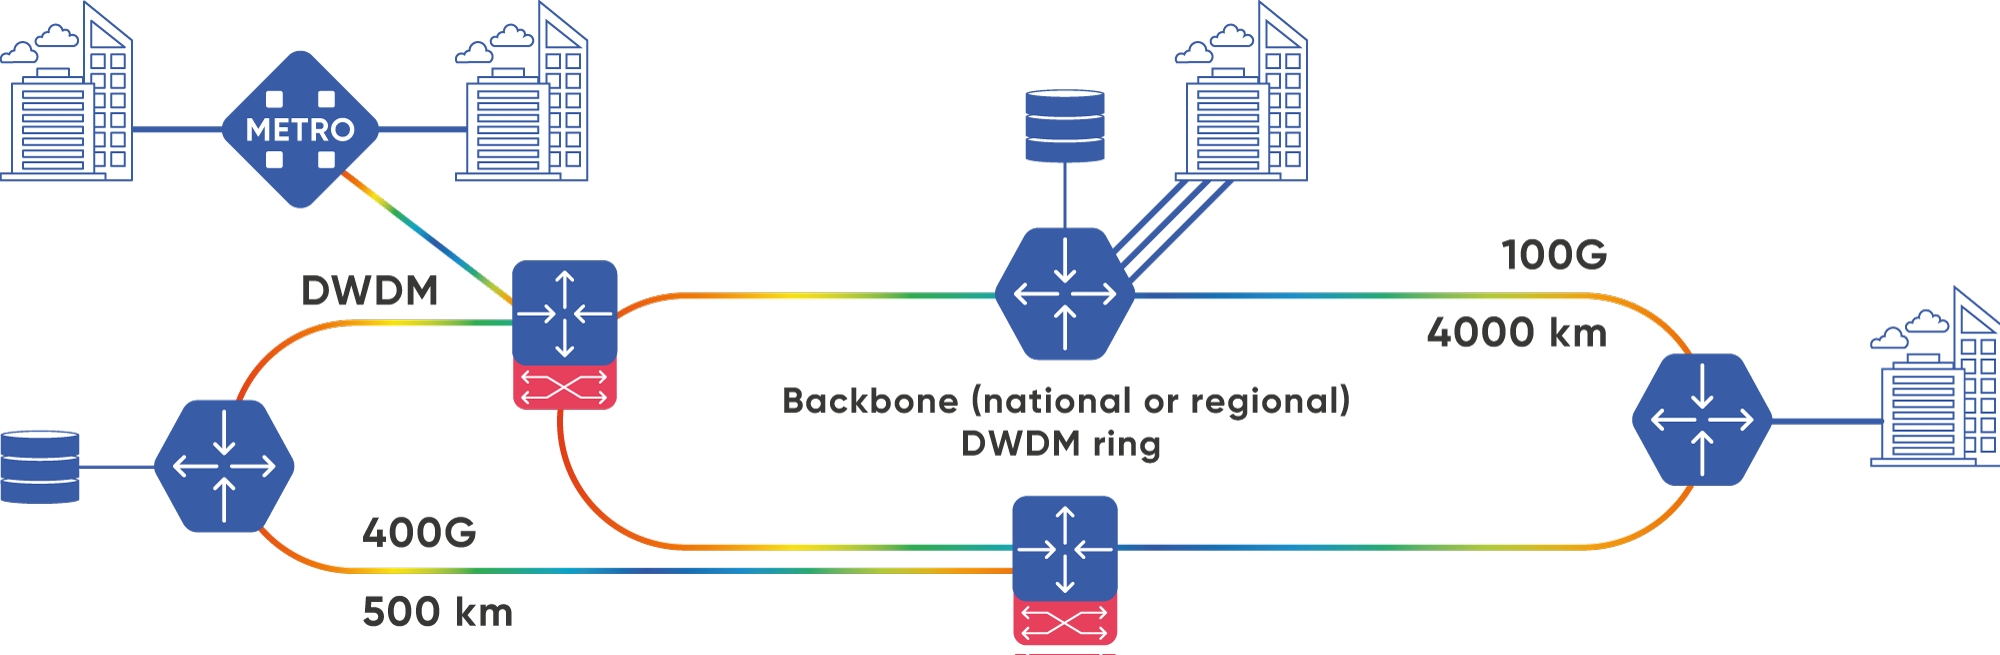 Backbone DWDM Networks